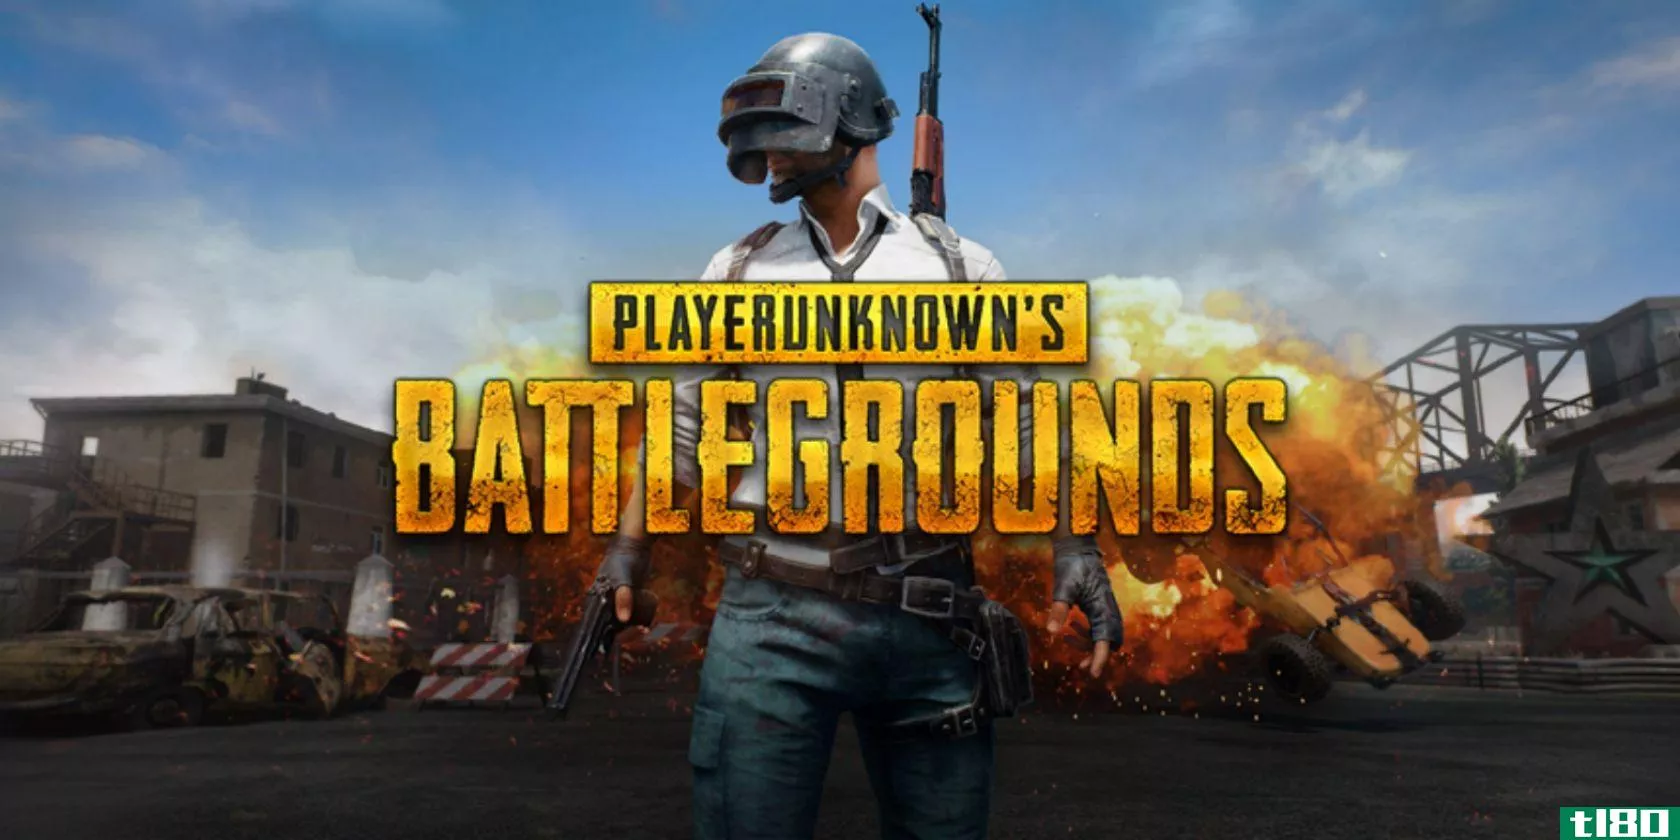 playerunknown-battlegrounds-logo